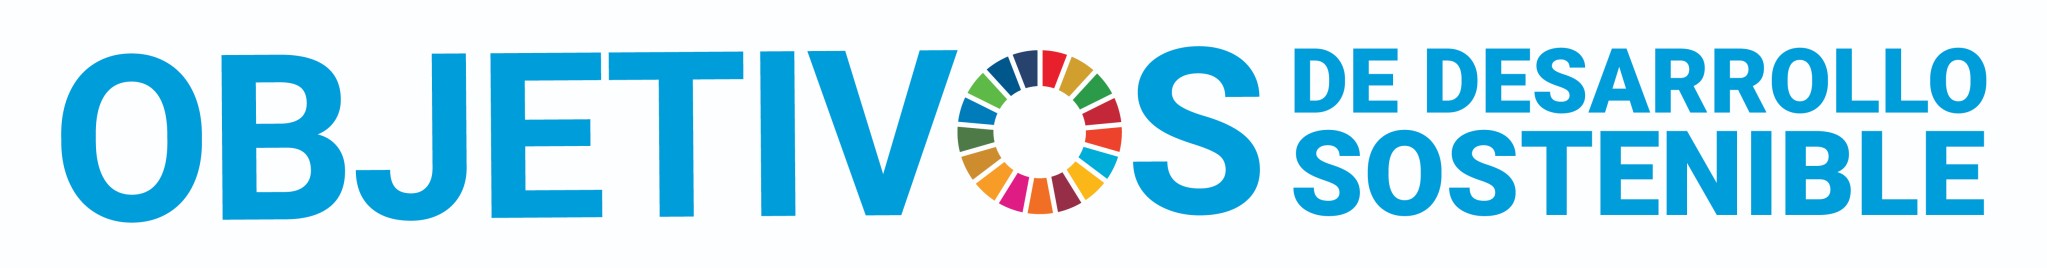 S SDG logo without UN emblem horizontal PRINT 1